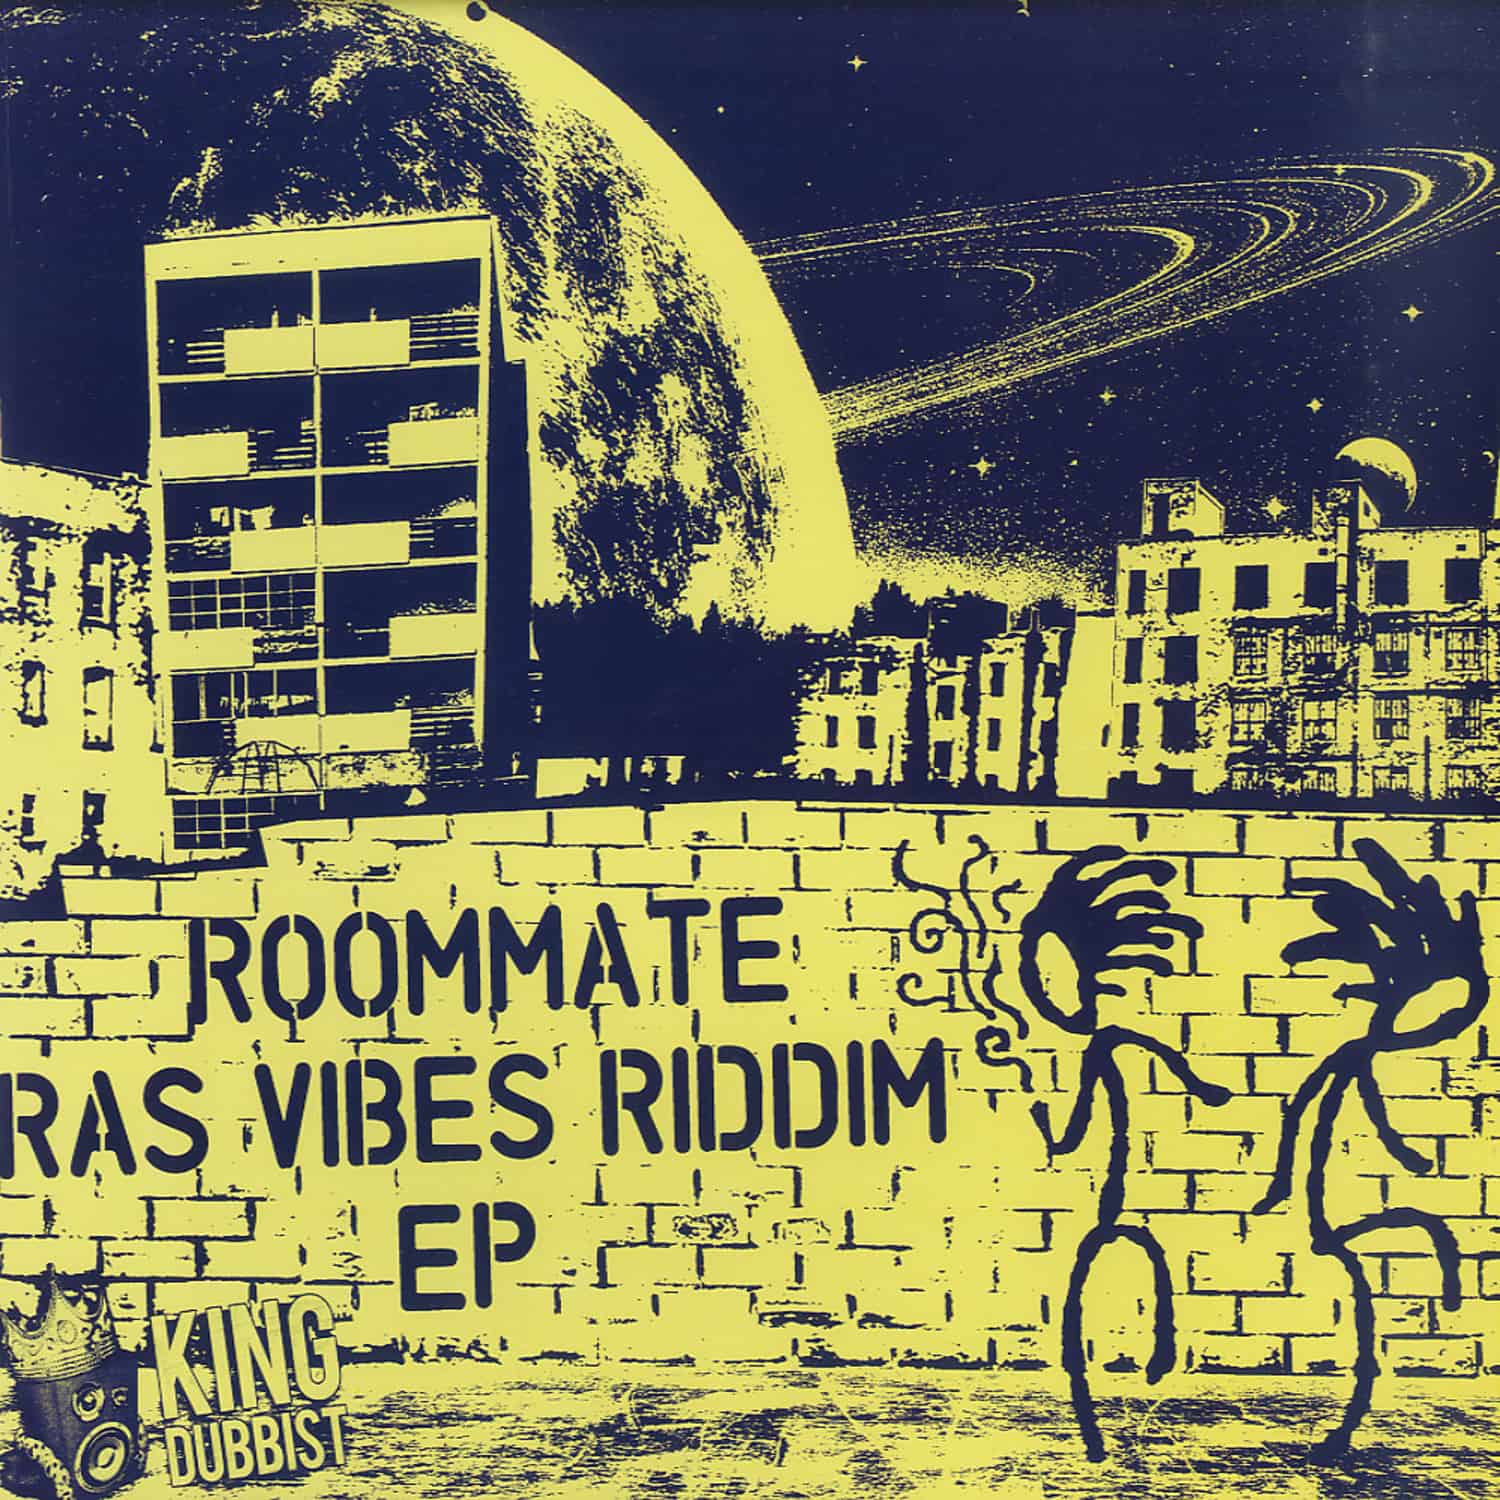 Roommate - RAS VIBES RIDDIM